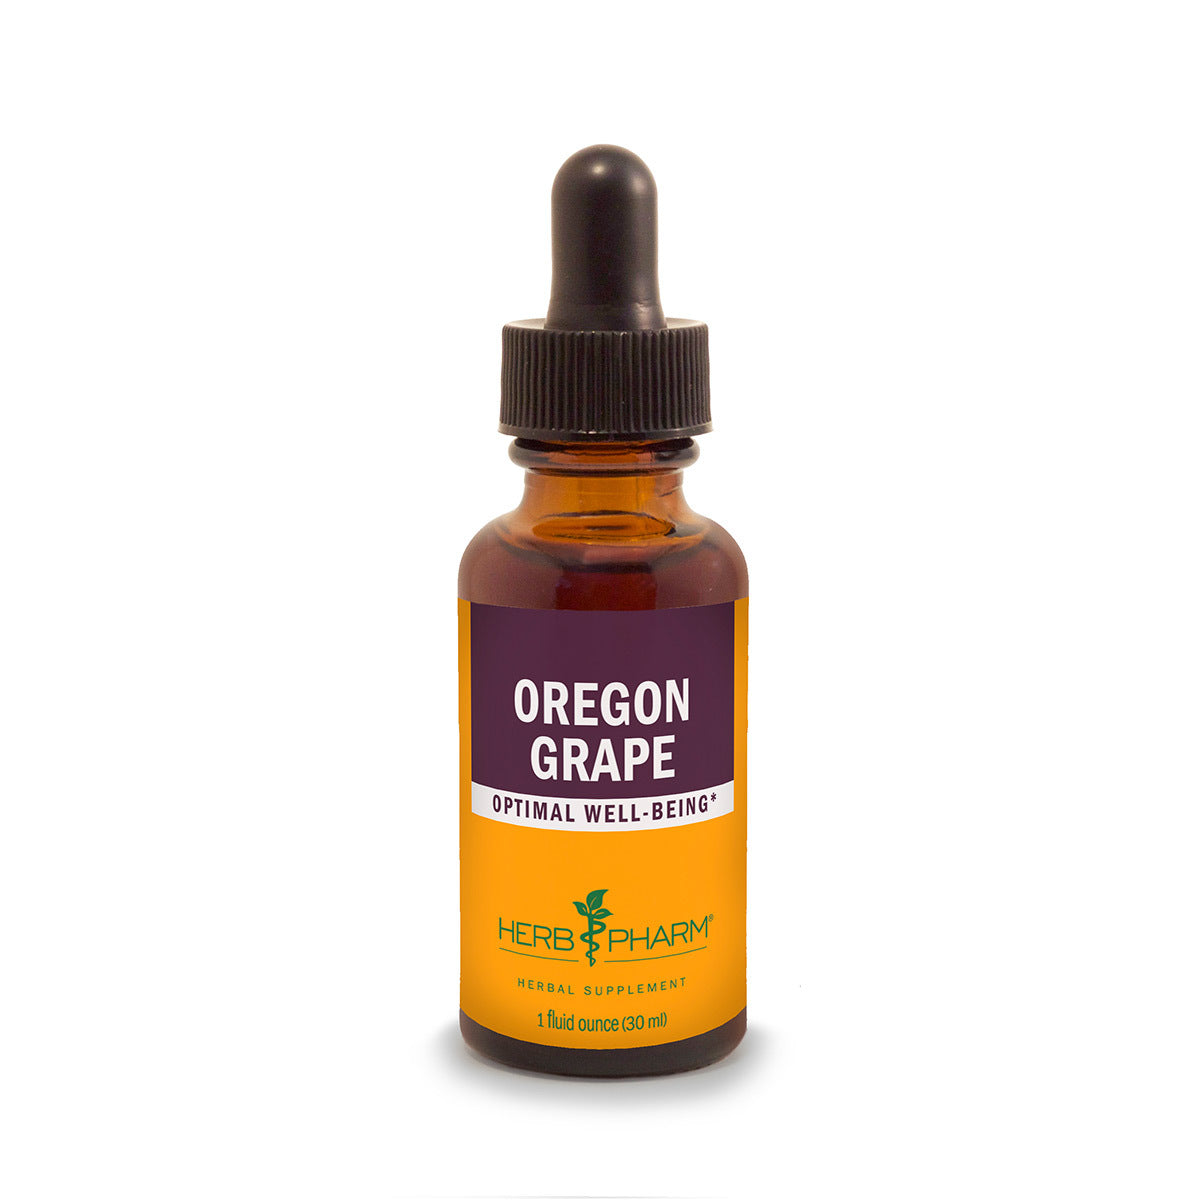 Primary image of Oregon Grape Extract